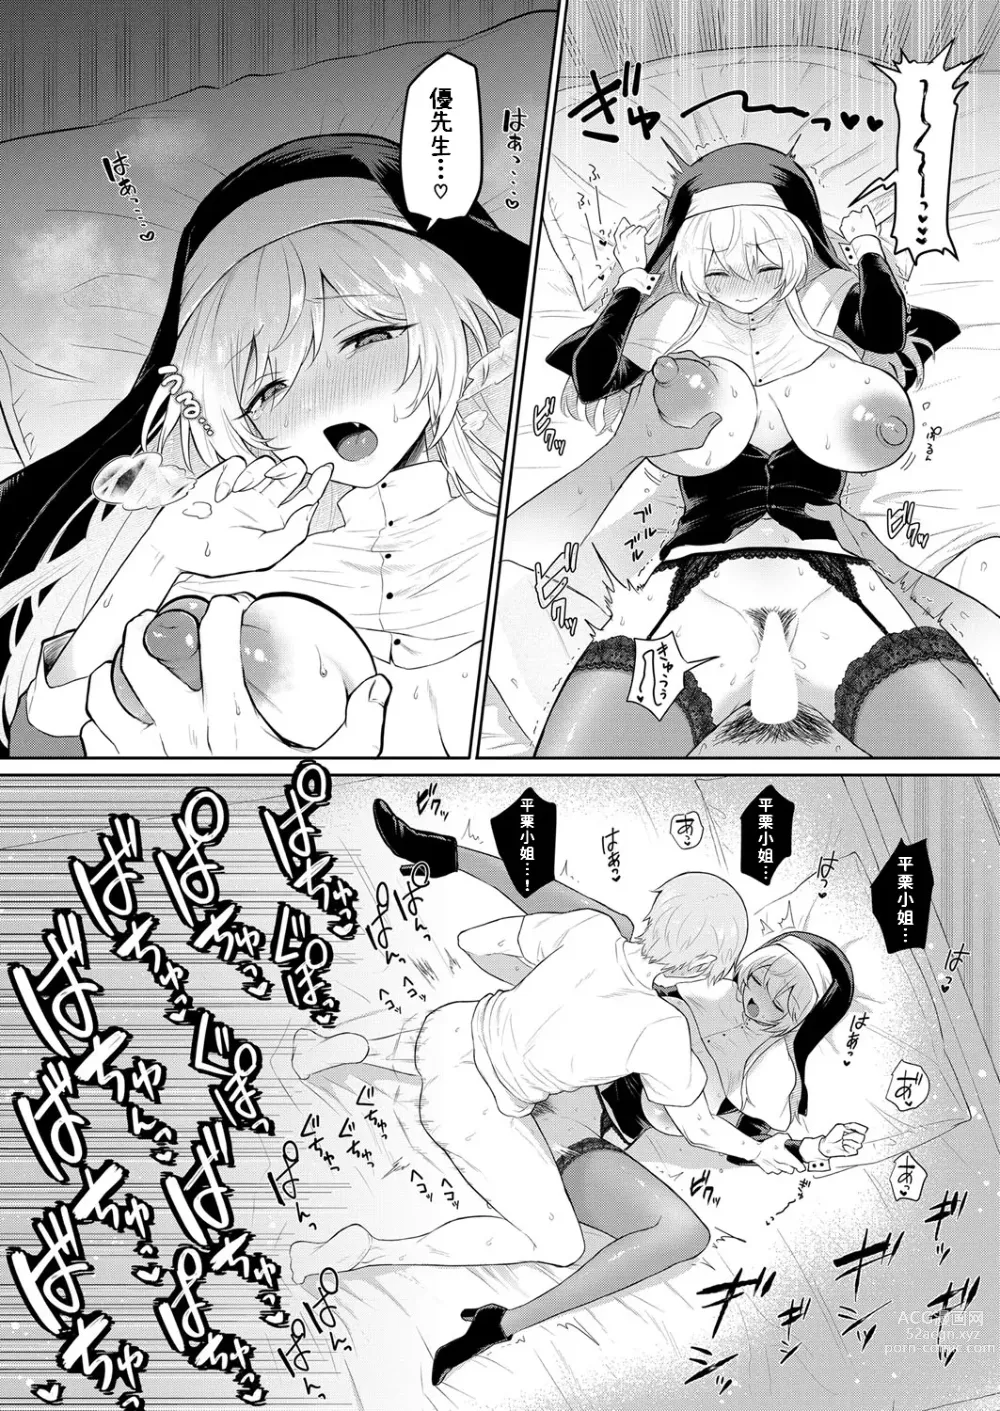 Page 16 of manga Nukumori Fukushikai Chinpopo